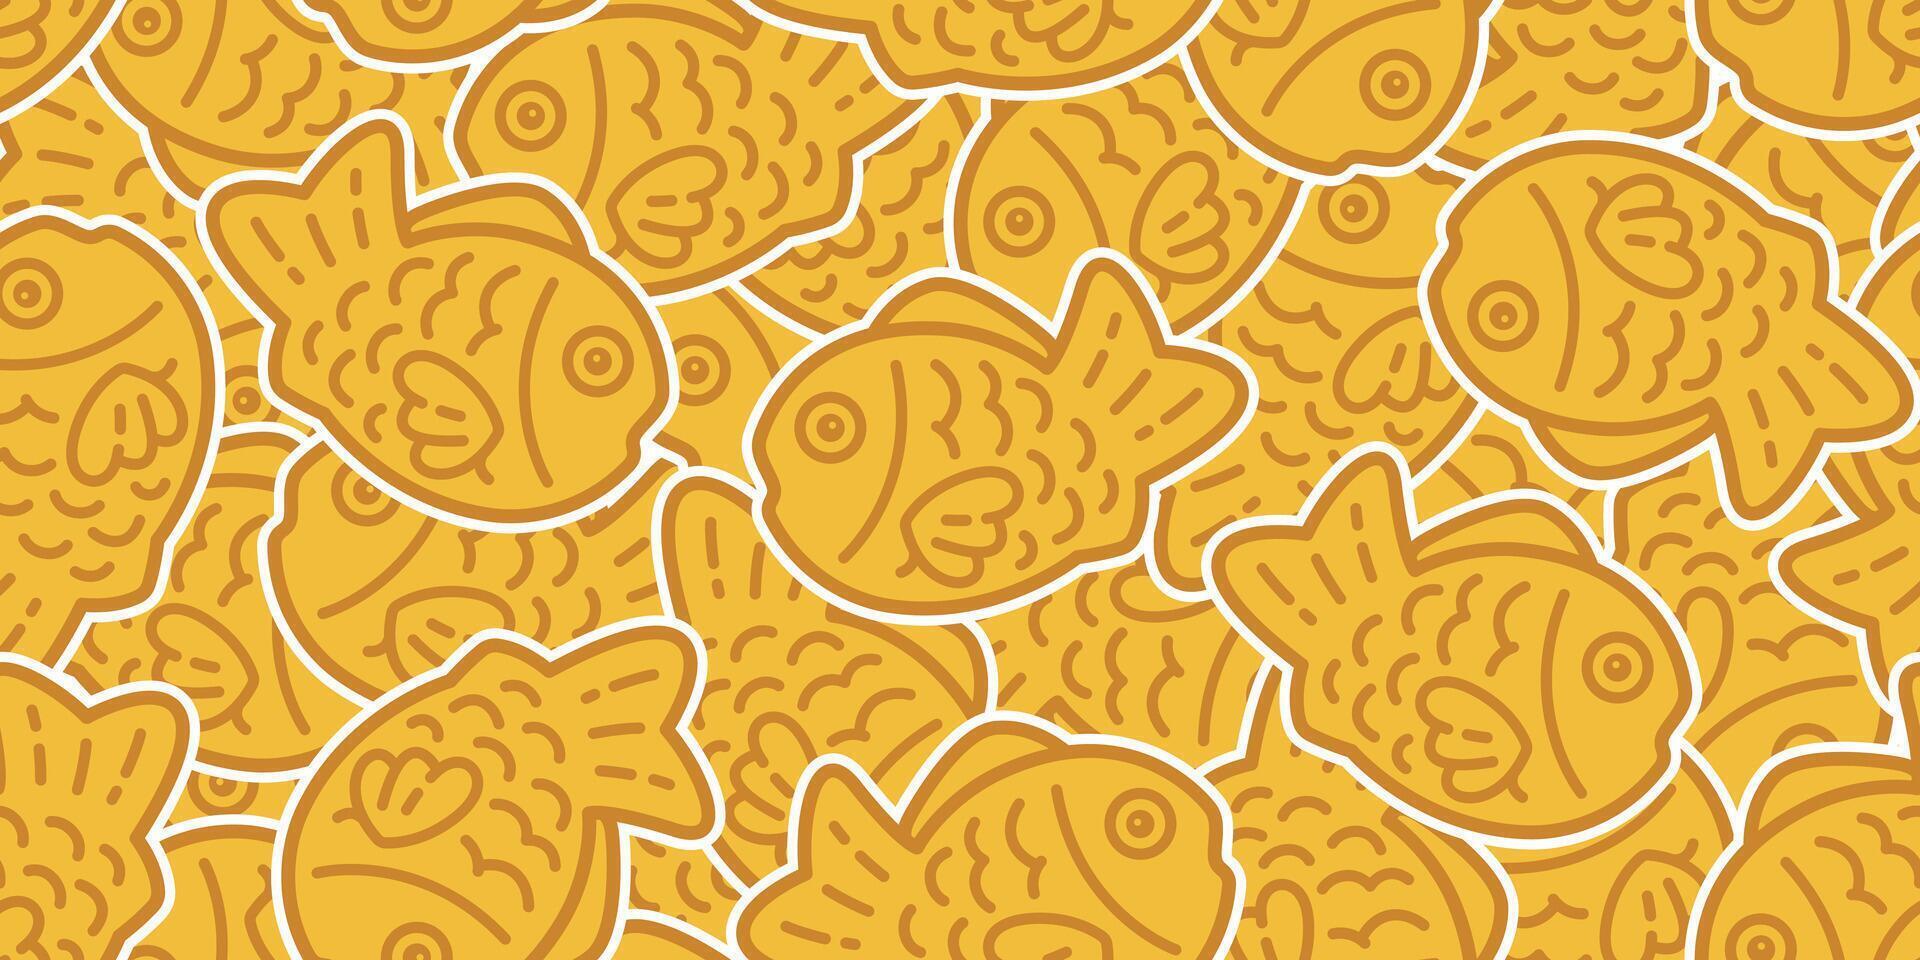 fish Taiyaki Seamless pattern bakery japan food snack tuna shark salmon dolphin doodle icon cartoon ocean sea tile background repeat wallpaper scarf isolated pet animal doodle illustration desi vector